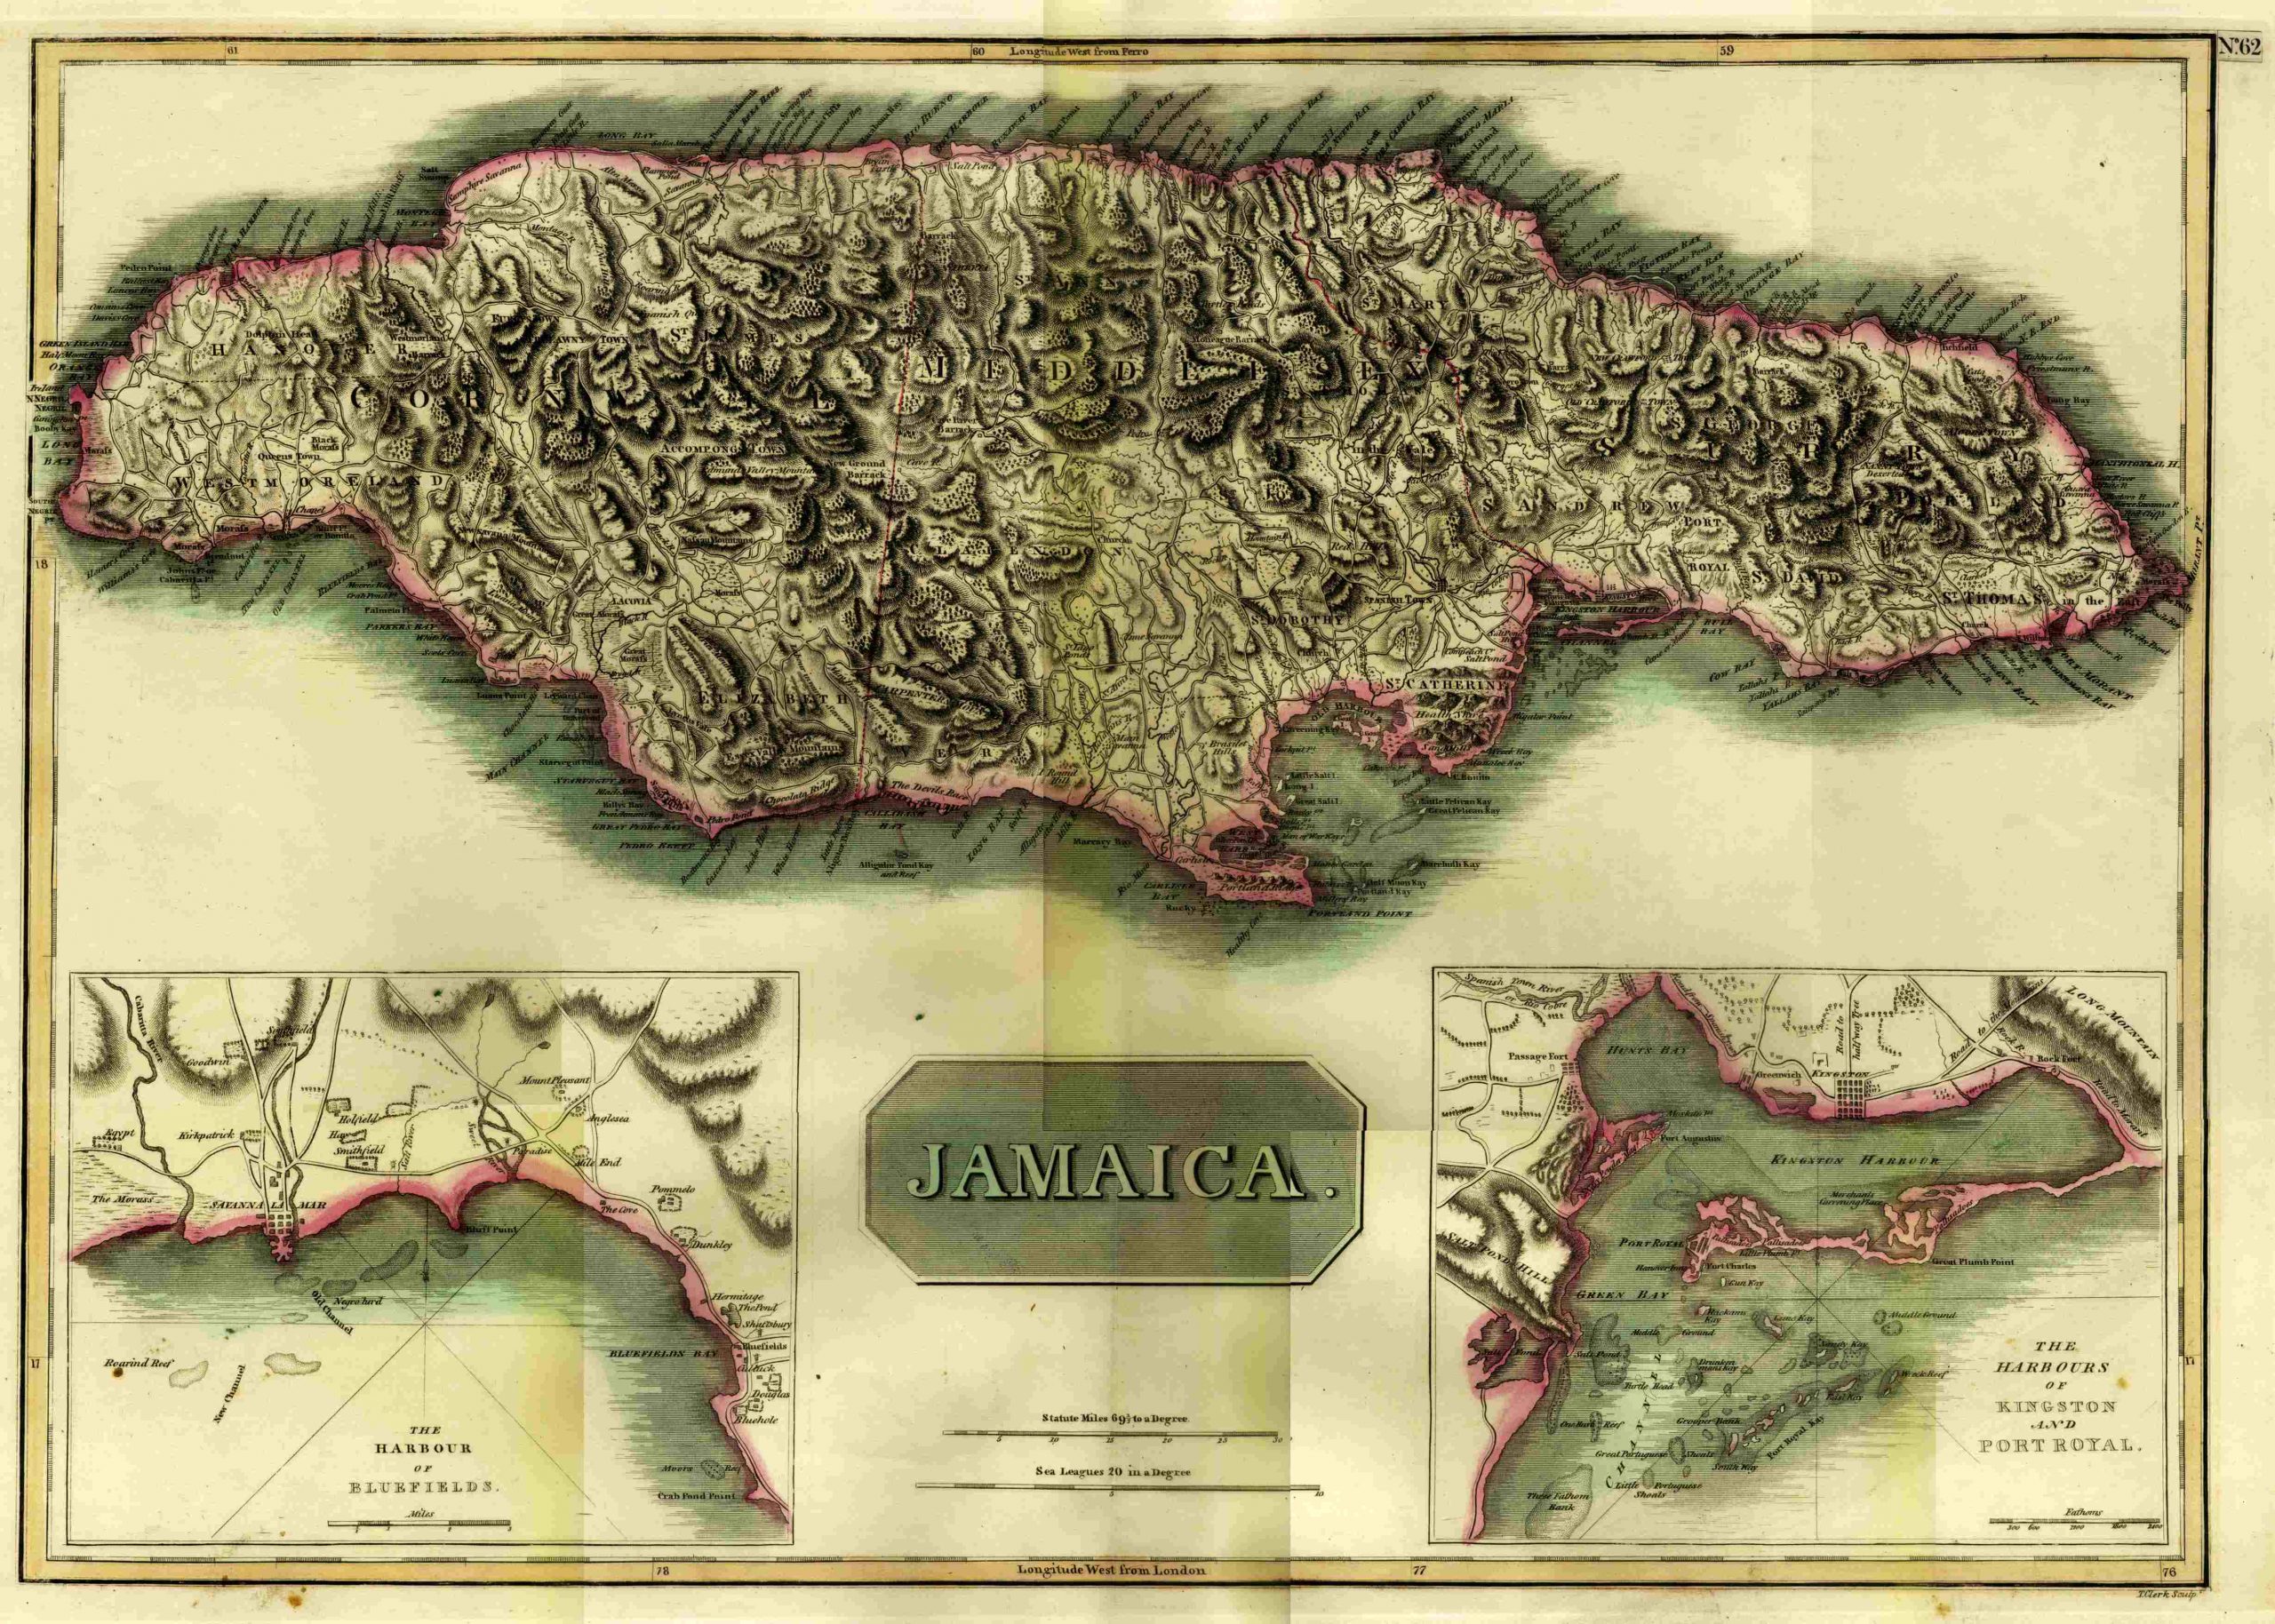 Thomson's Jamaica map - 1814